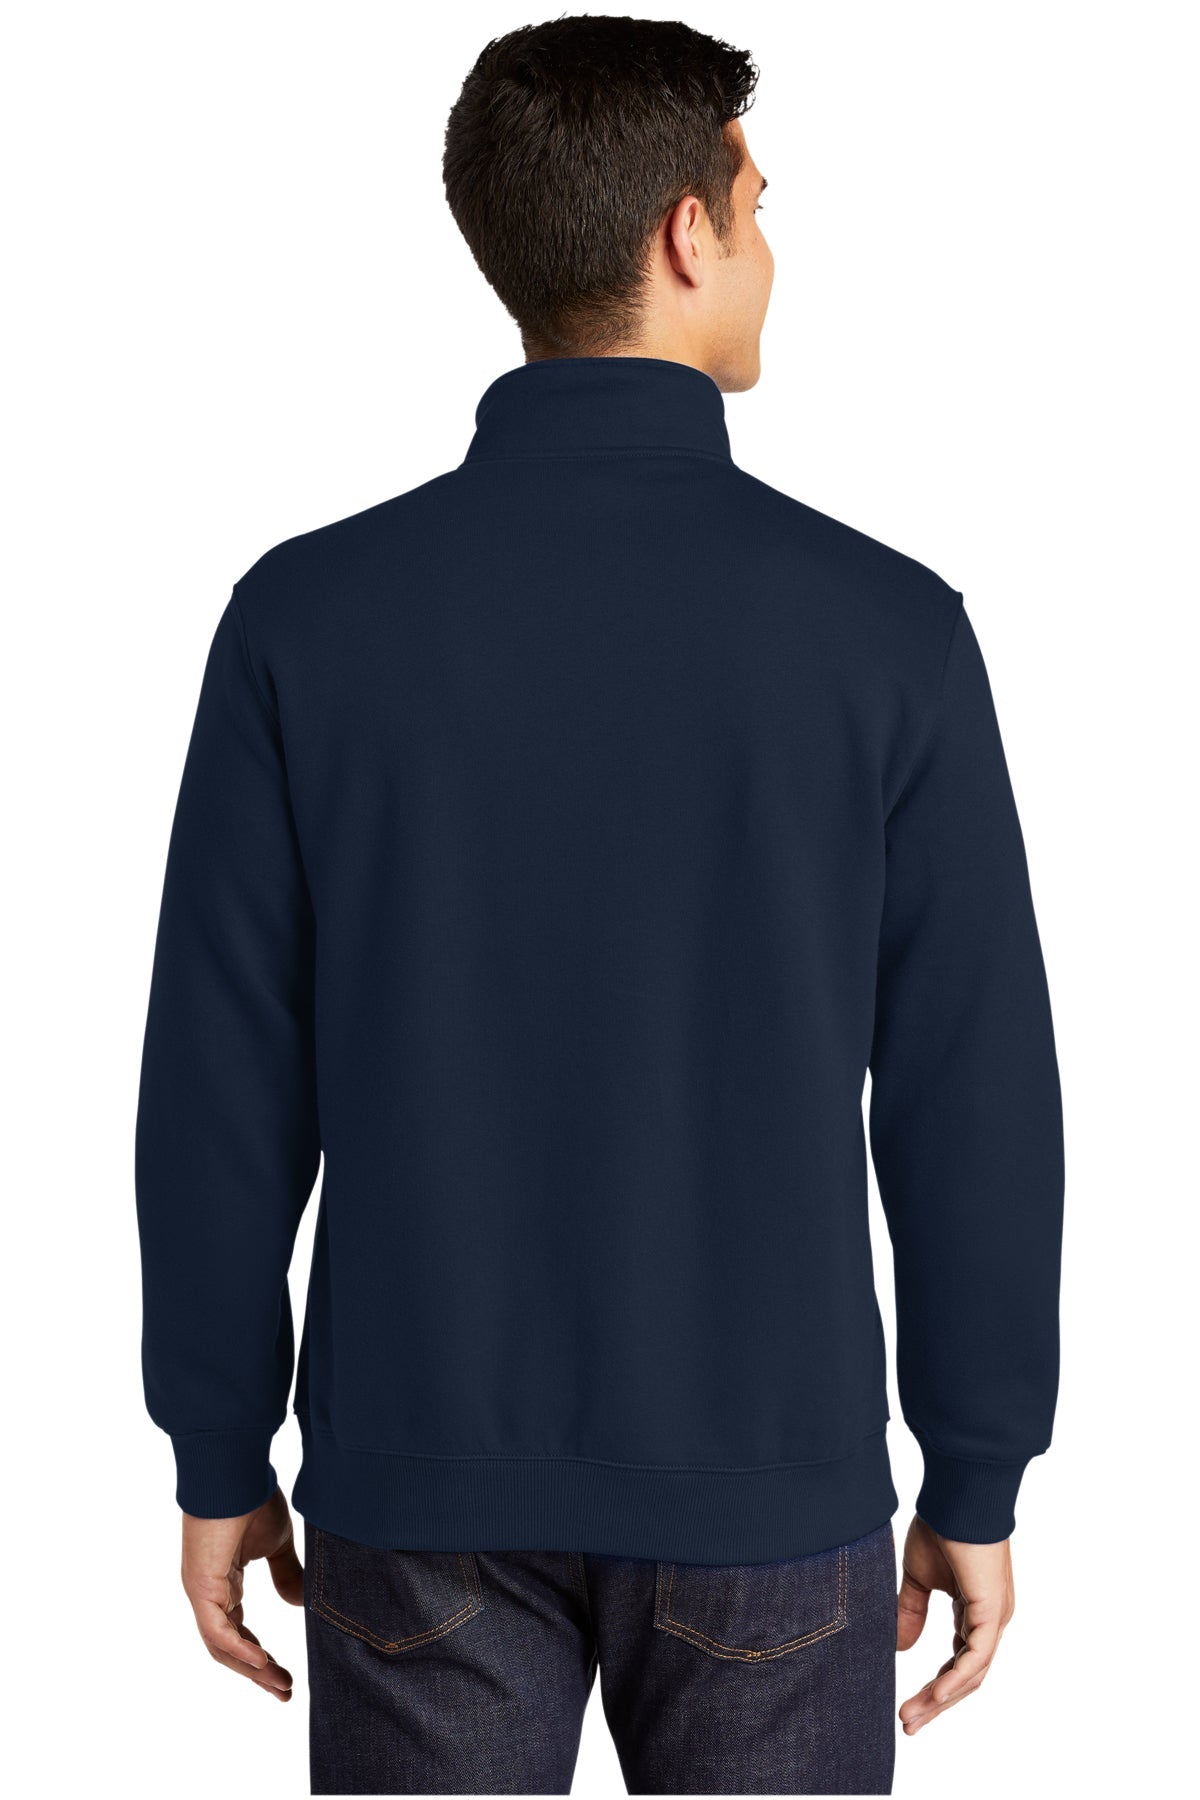 sport-tek_tst253 _true navy_company_logo_sweatshirts